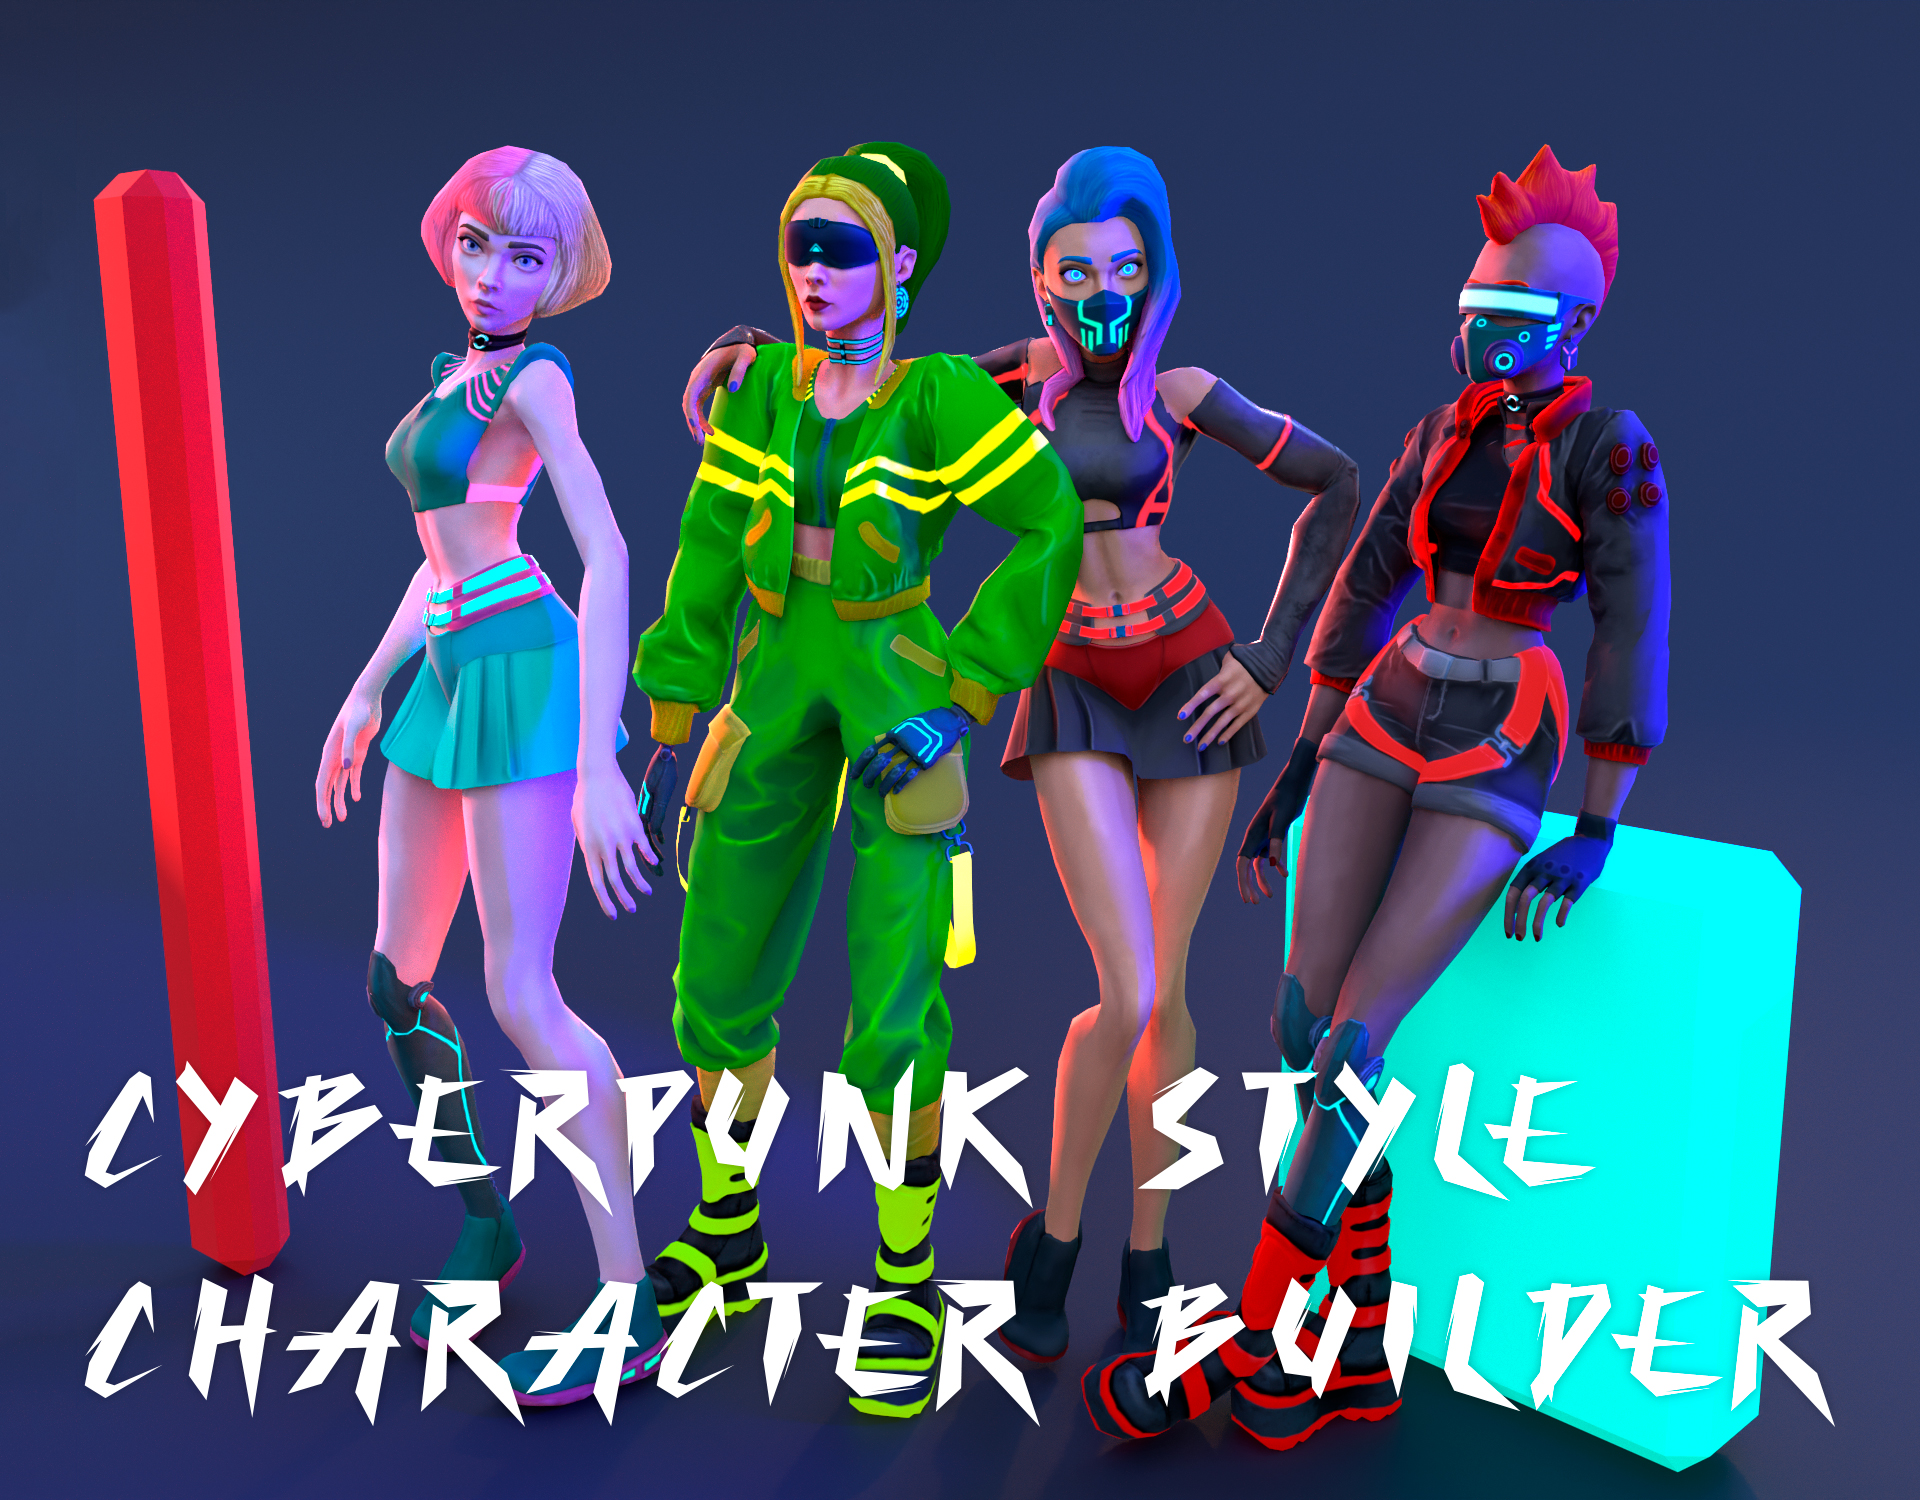 Cyberpunk-style character builder